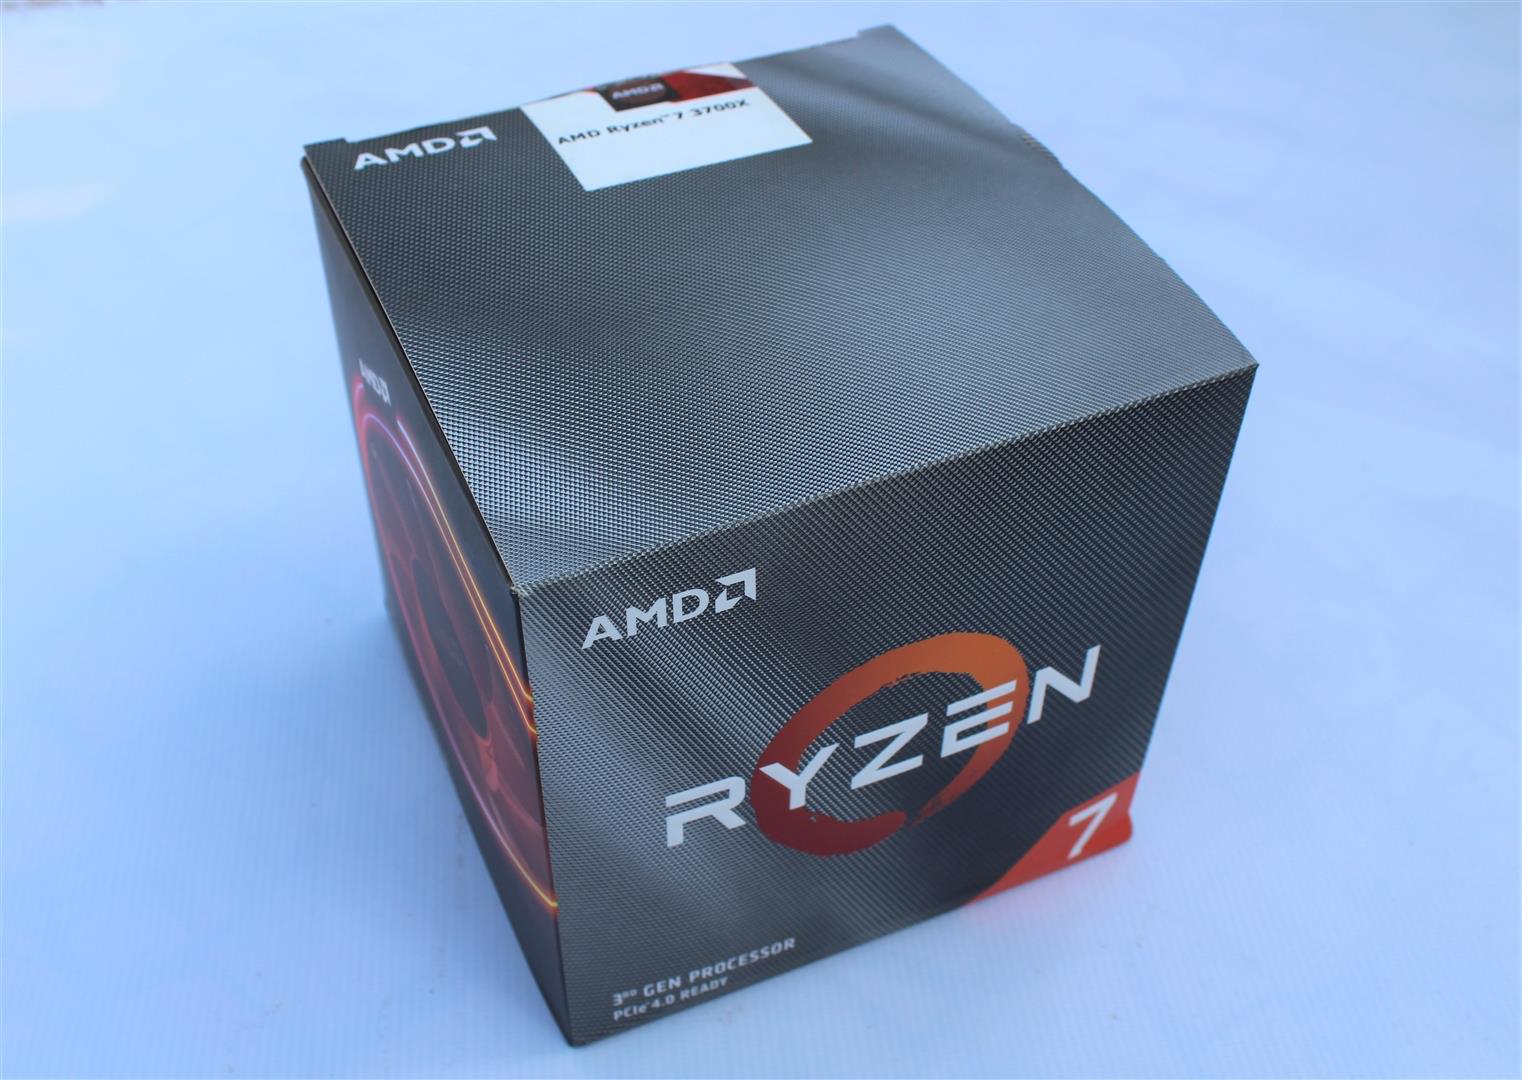 AMD Ryzen 7 3700X Processor Review | PC TeK REVIEWS